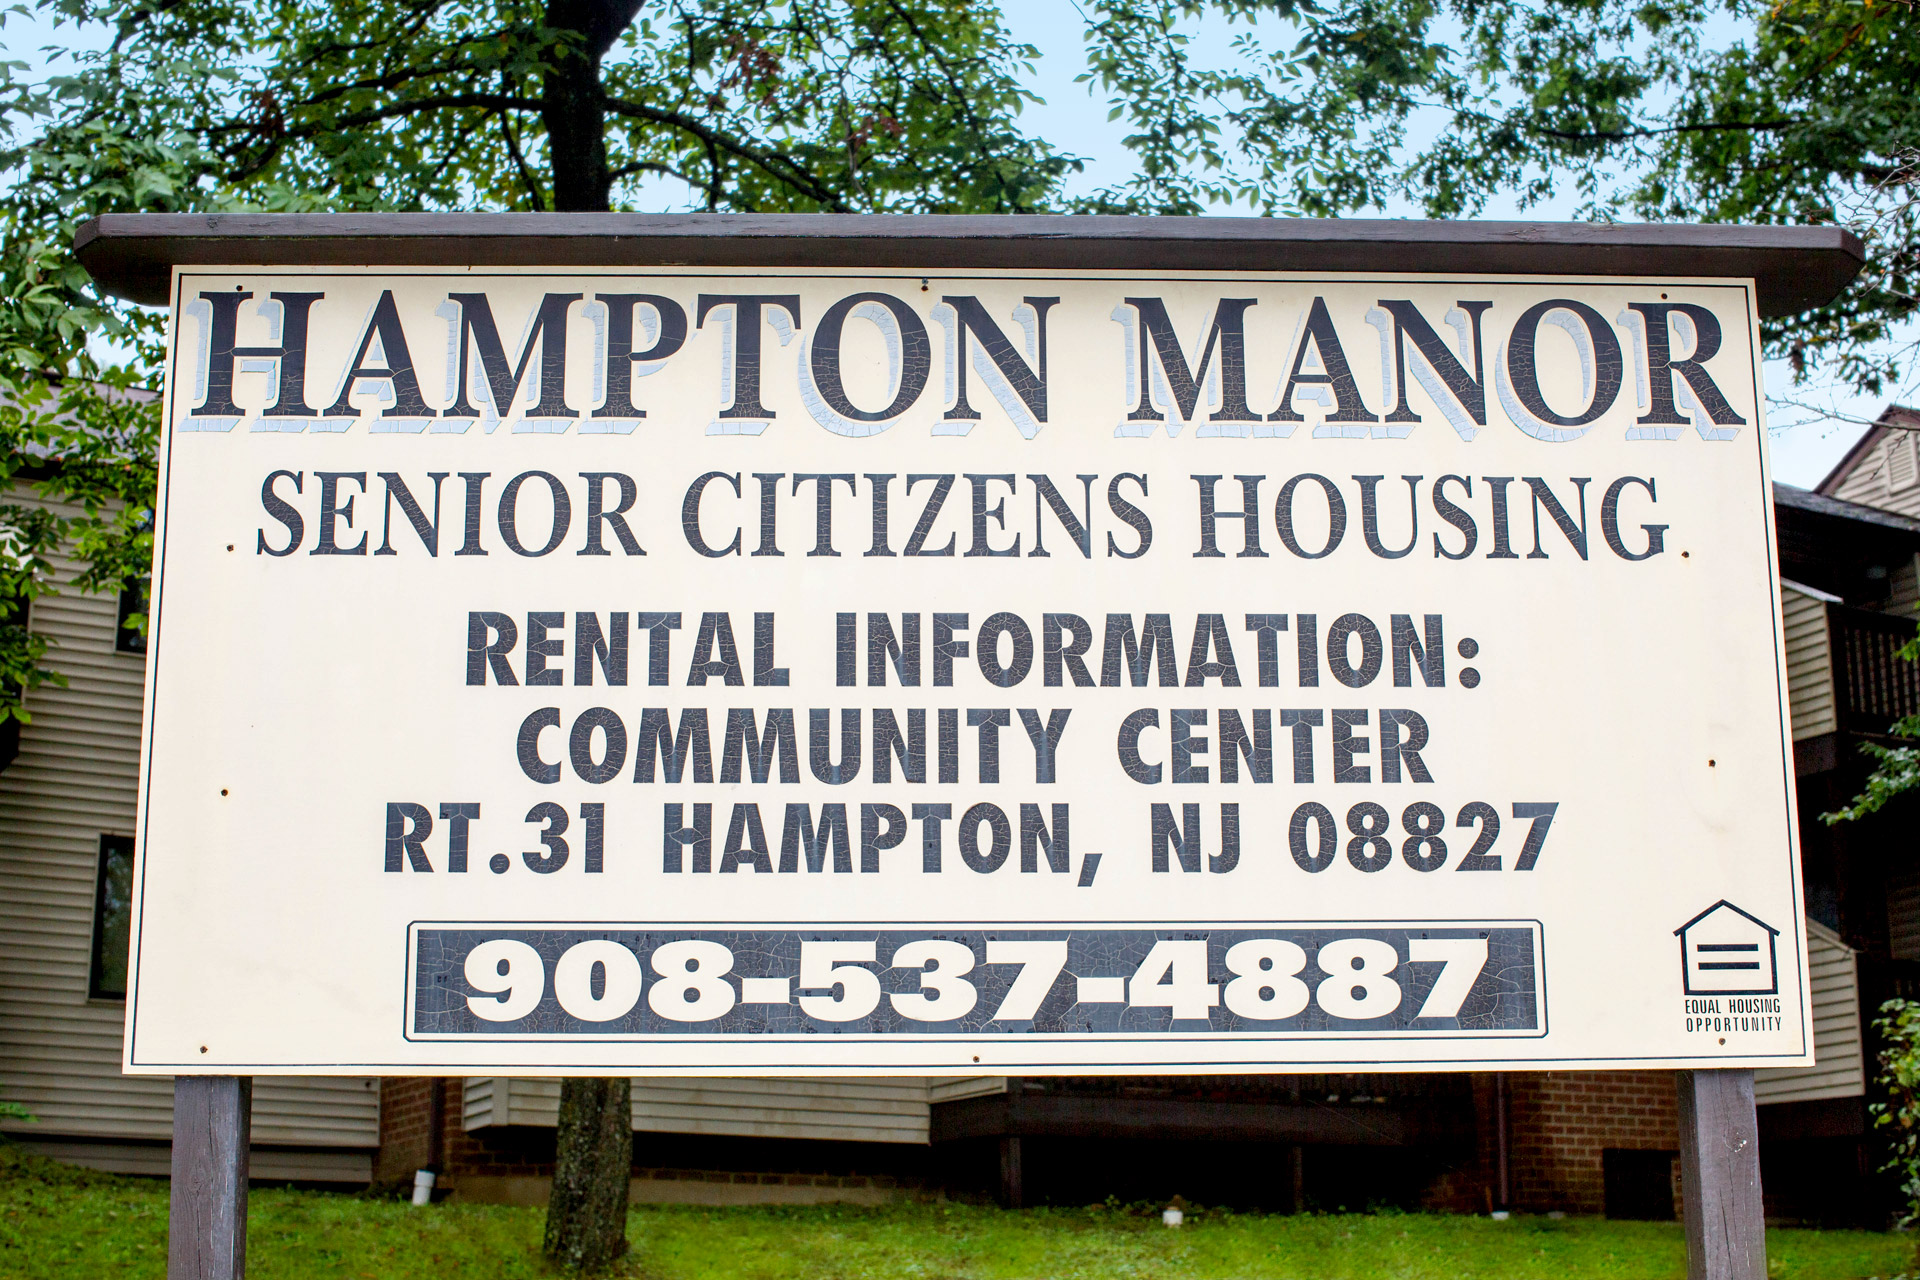 HAMPTON MANOR